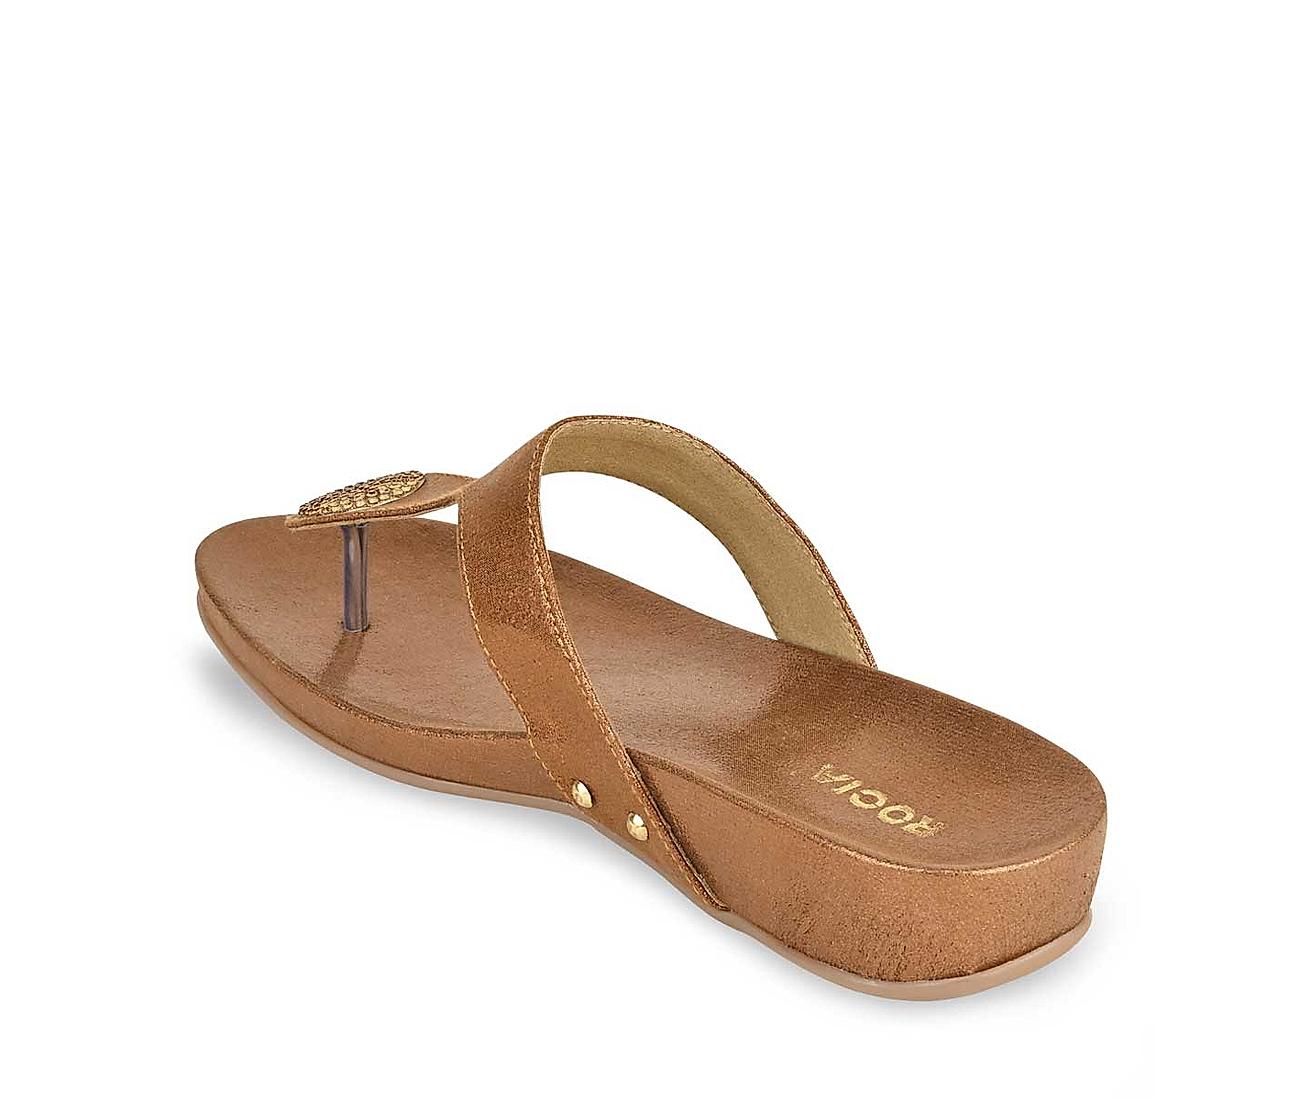 Buy Shoetopia Stylish Ethnic Black Flat Sandals for Women & Girls online